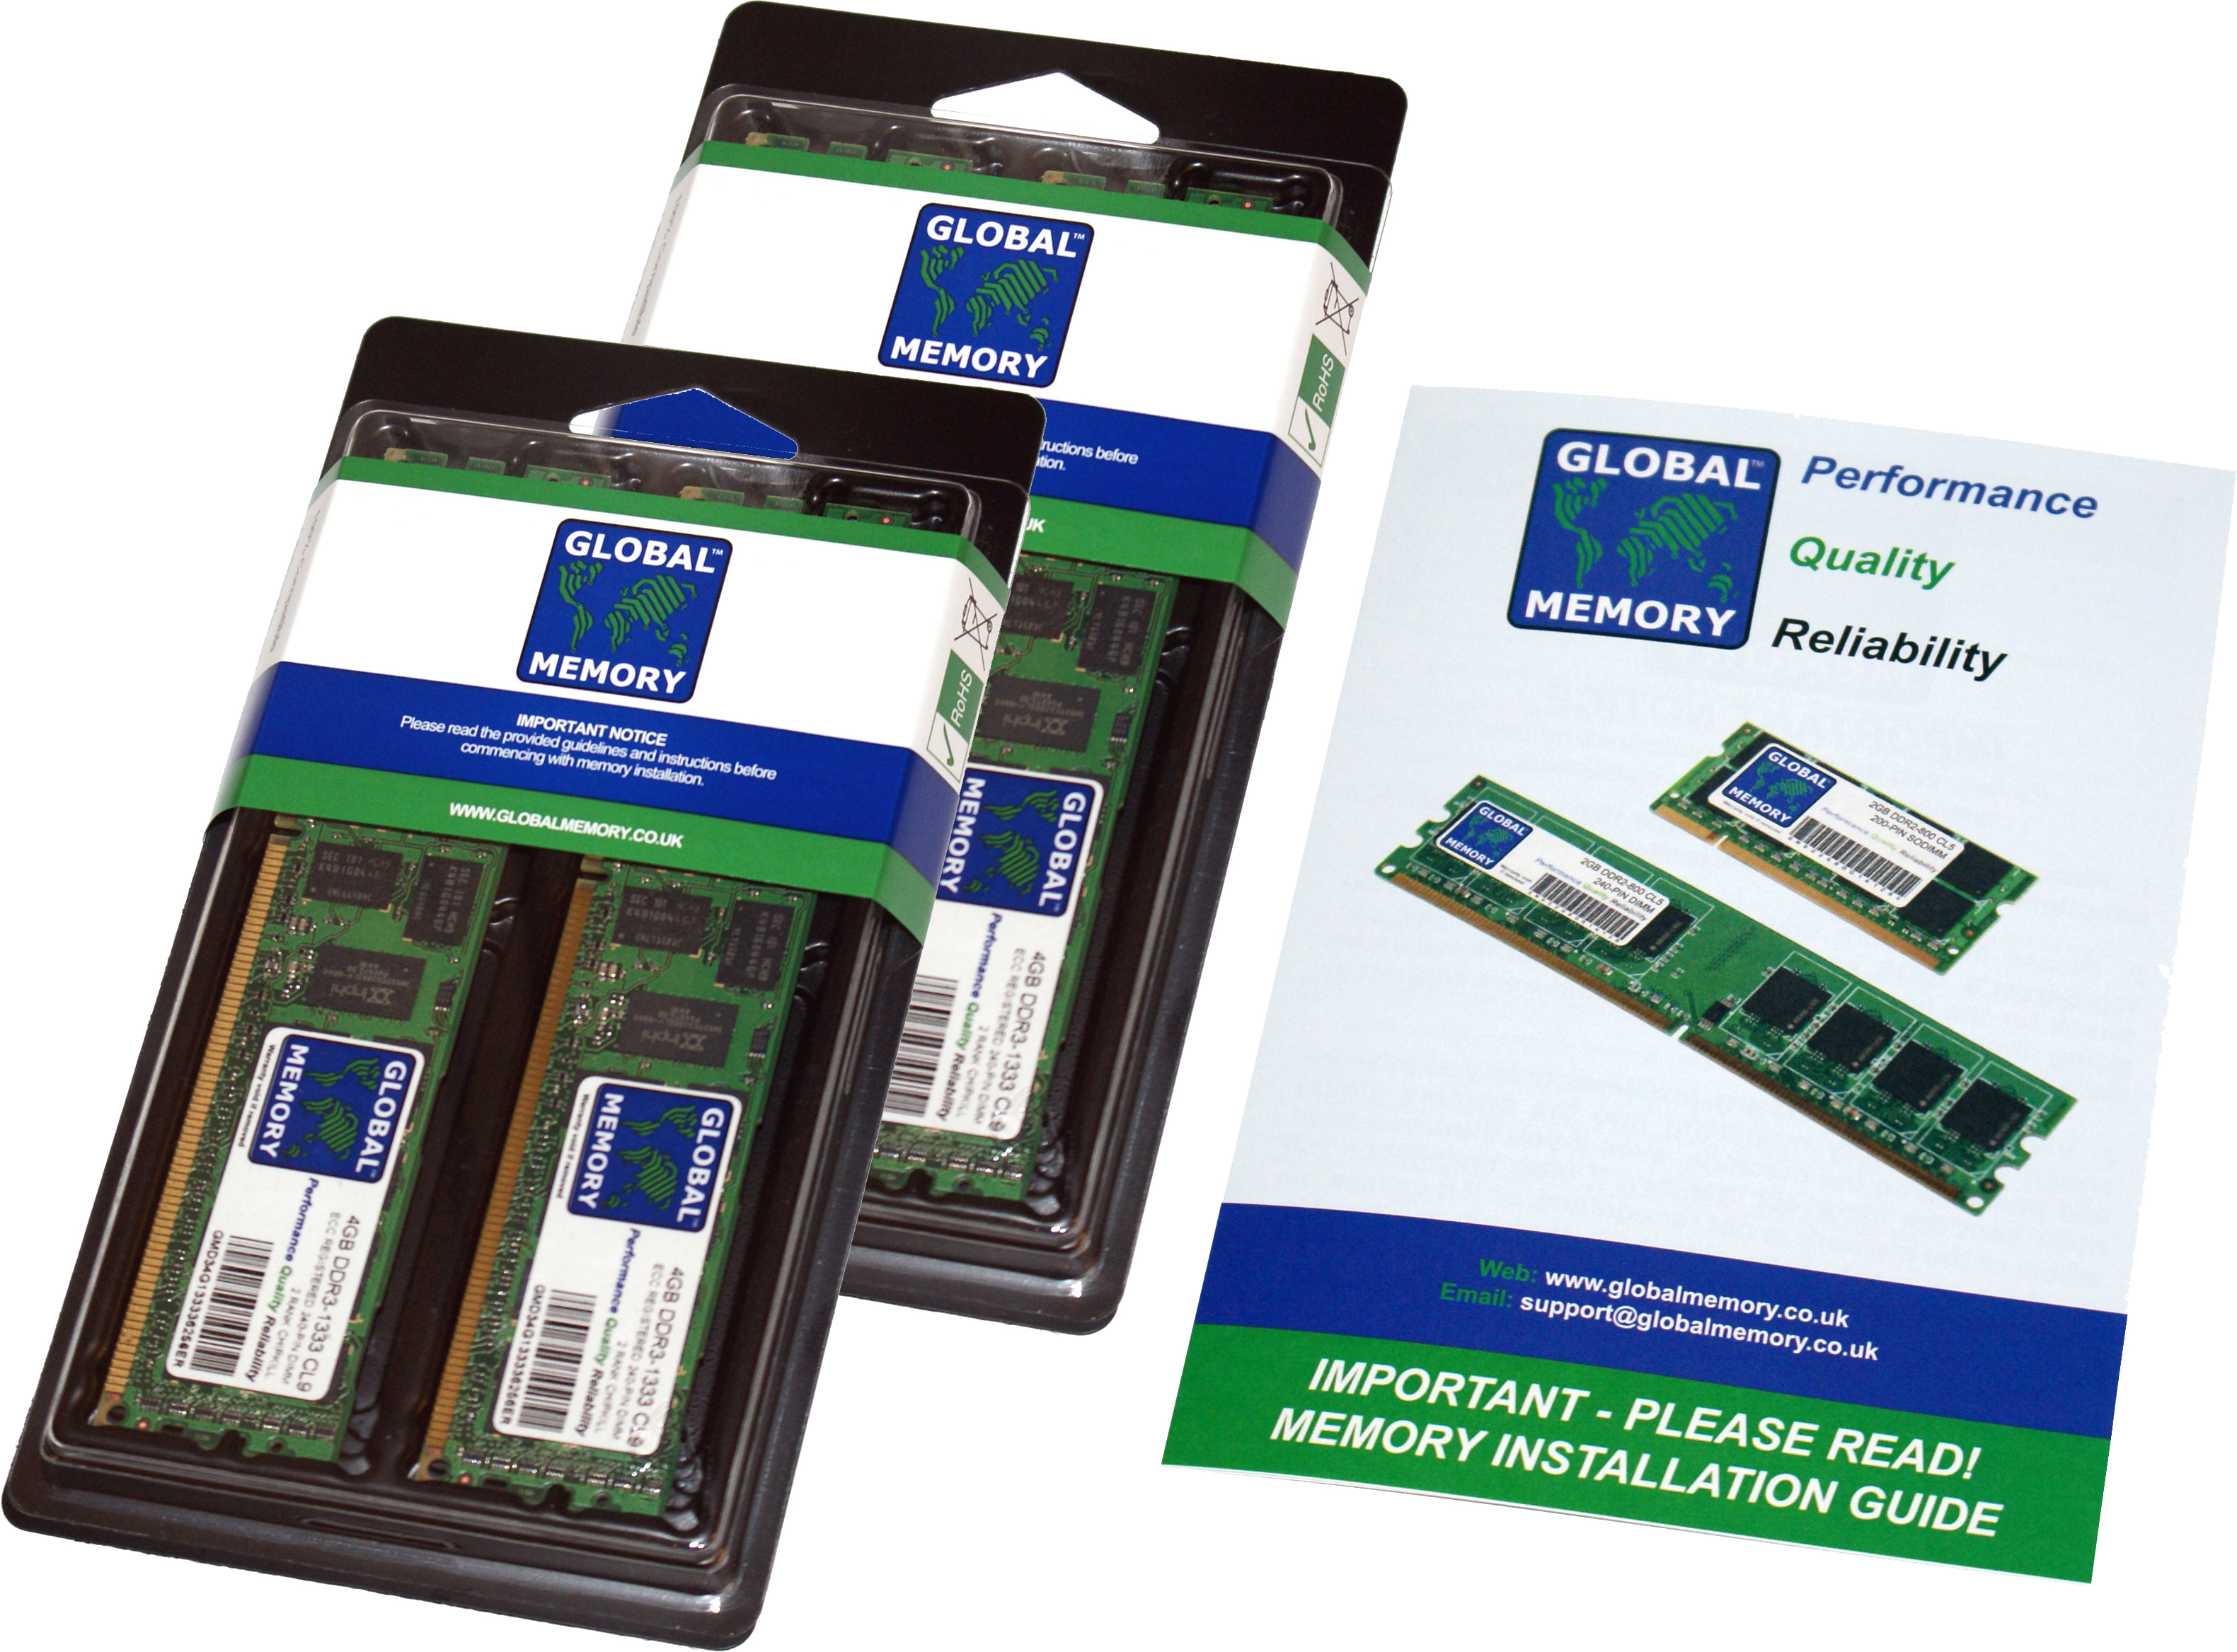 128GB (4 x 32GB) DDR4 2400MHz PC4-19200 288-PIN ECC REGISTERED DIMM (RDIMM) MEMORY RAM KIT FOR SUN SERVERS/WORKSTATIONS (8 RANK KIT CHIPKILL)